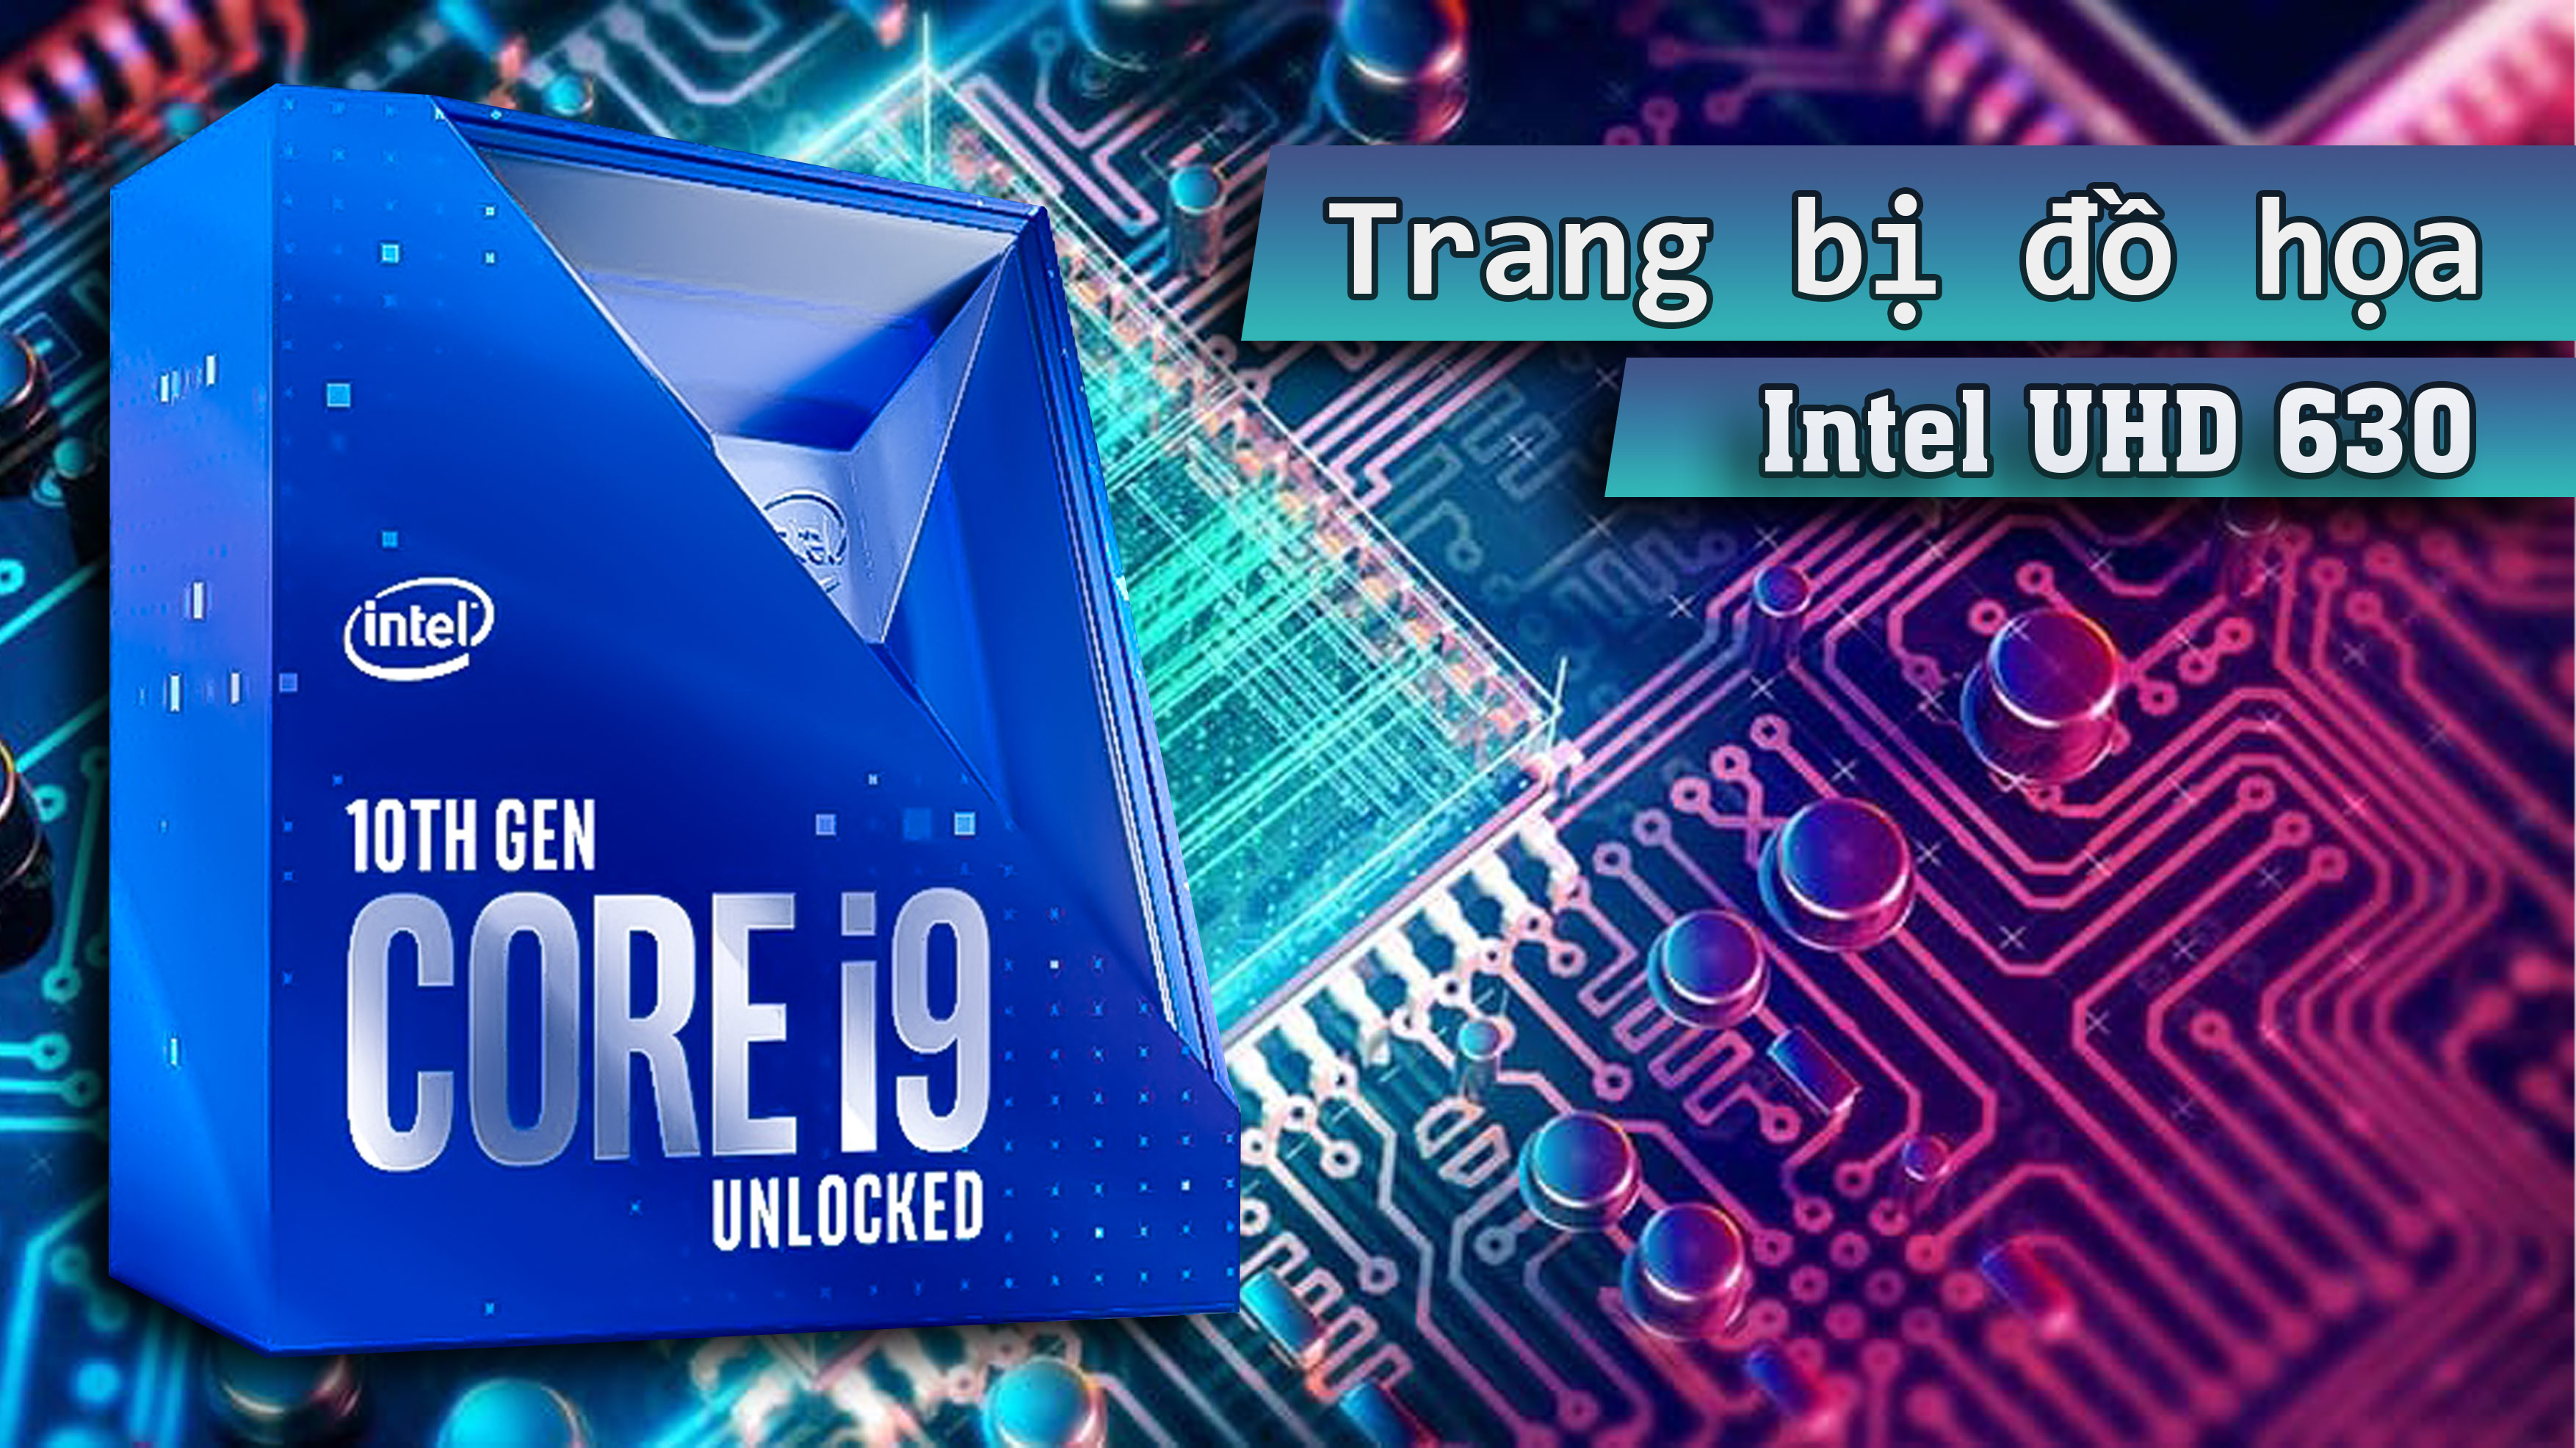  CPU Intel Comet Lake Core i9-10900K | Trang bị đồ họa Intel UHD